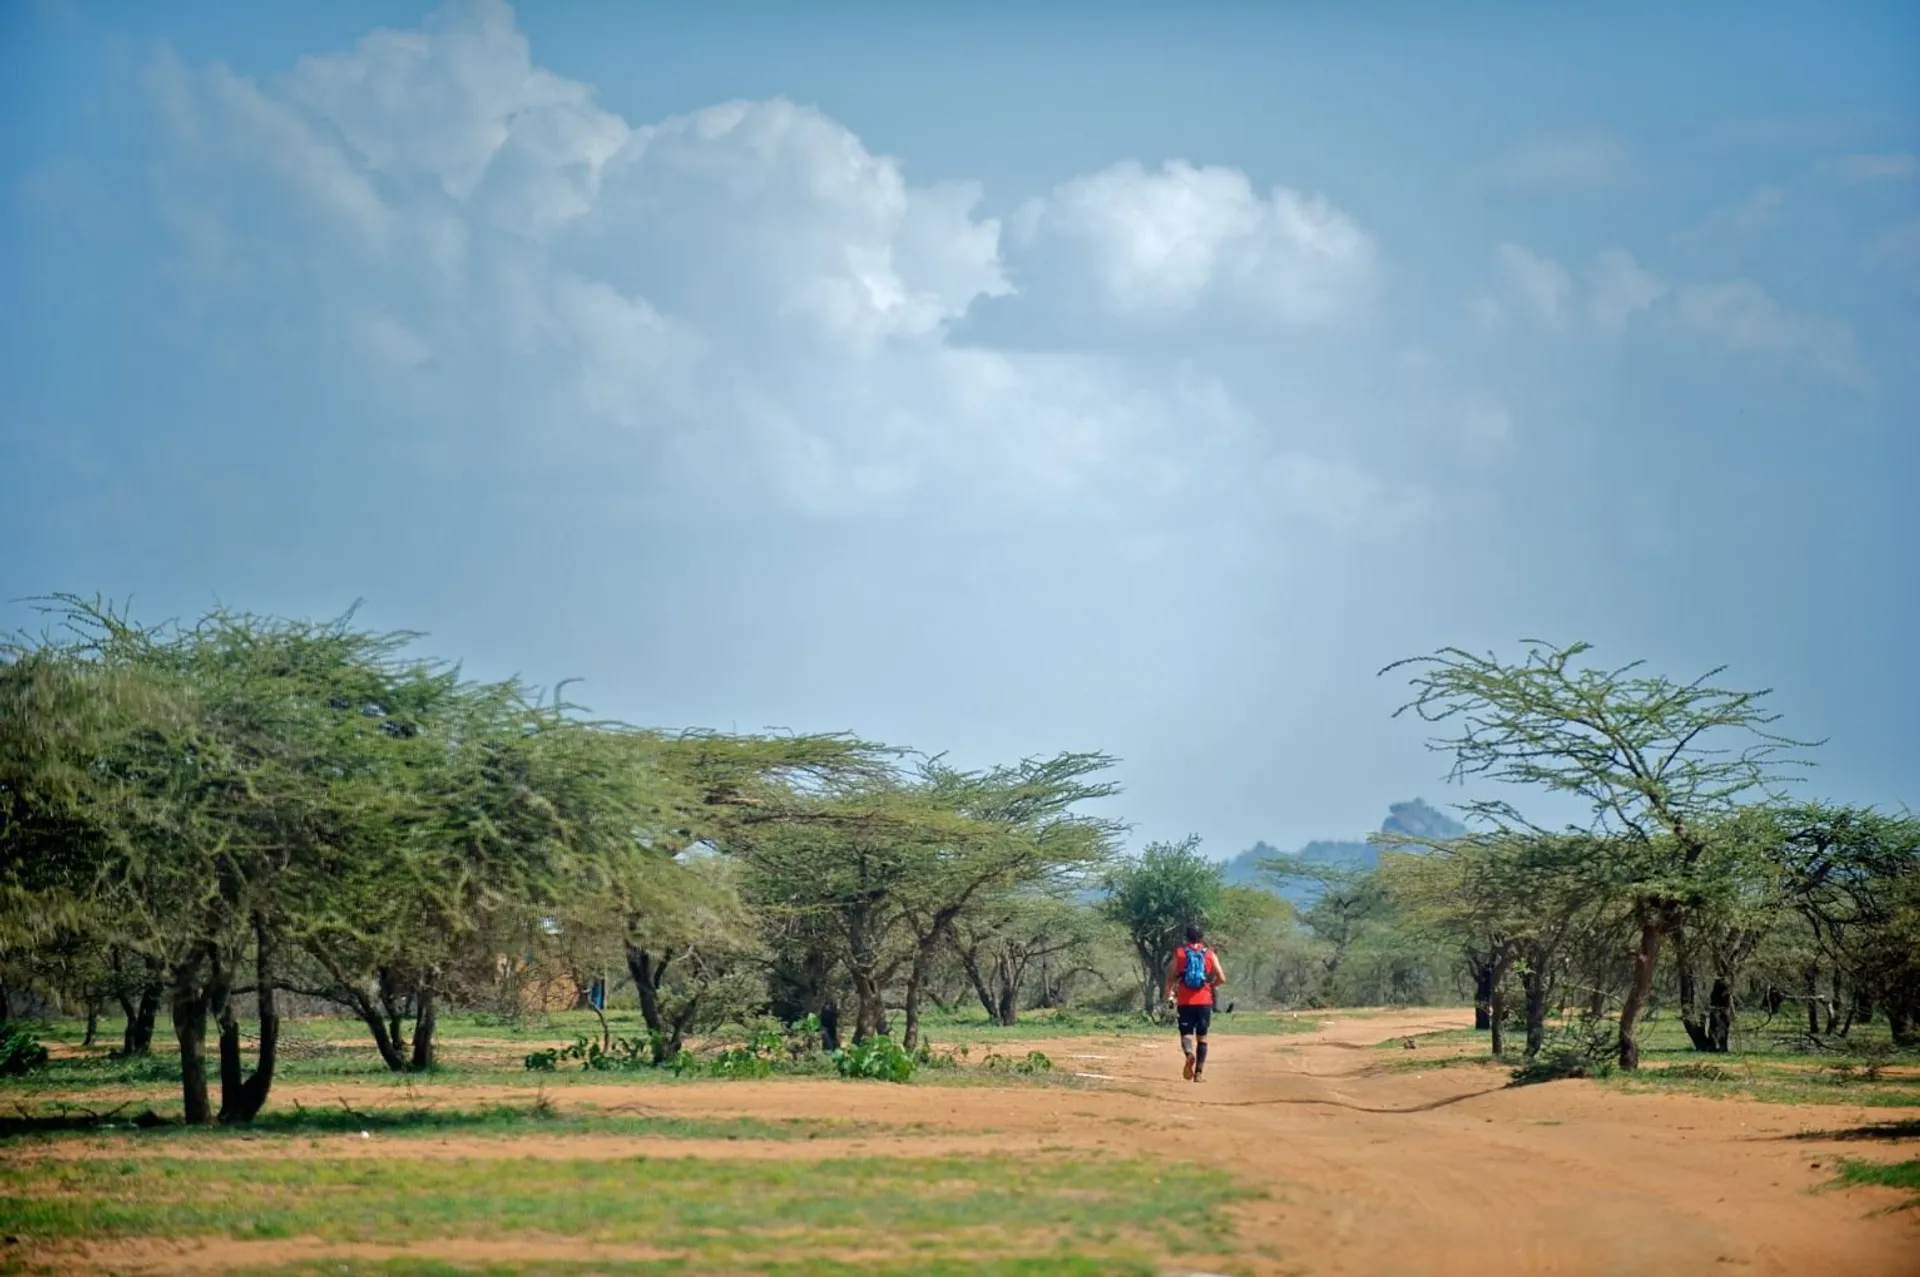 Amazing Maasai Marathon